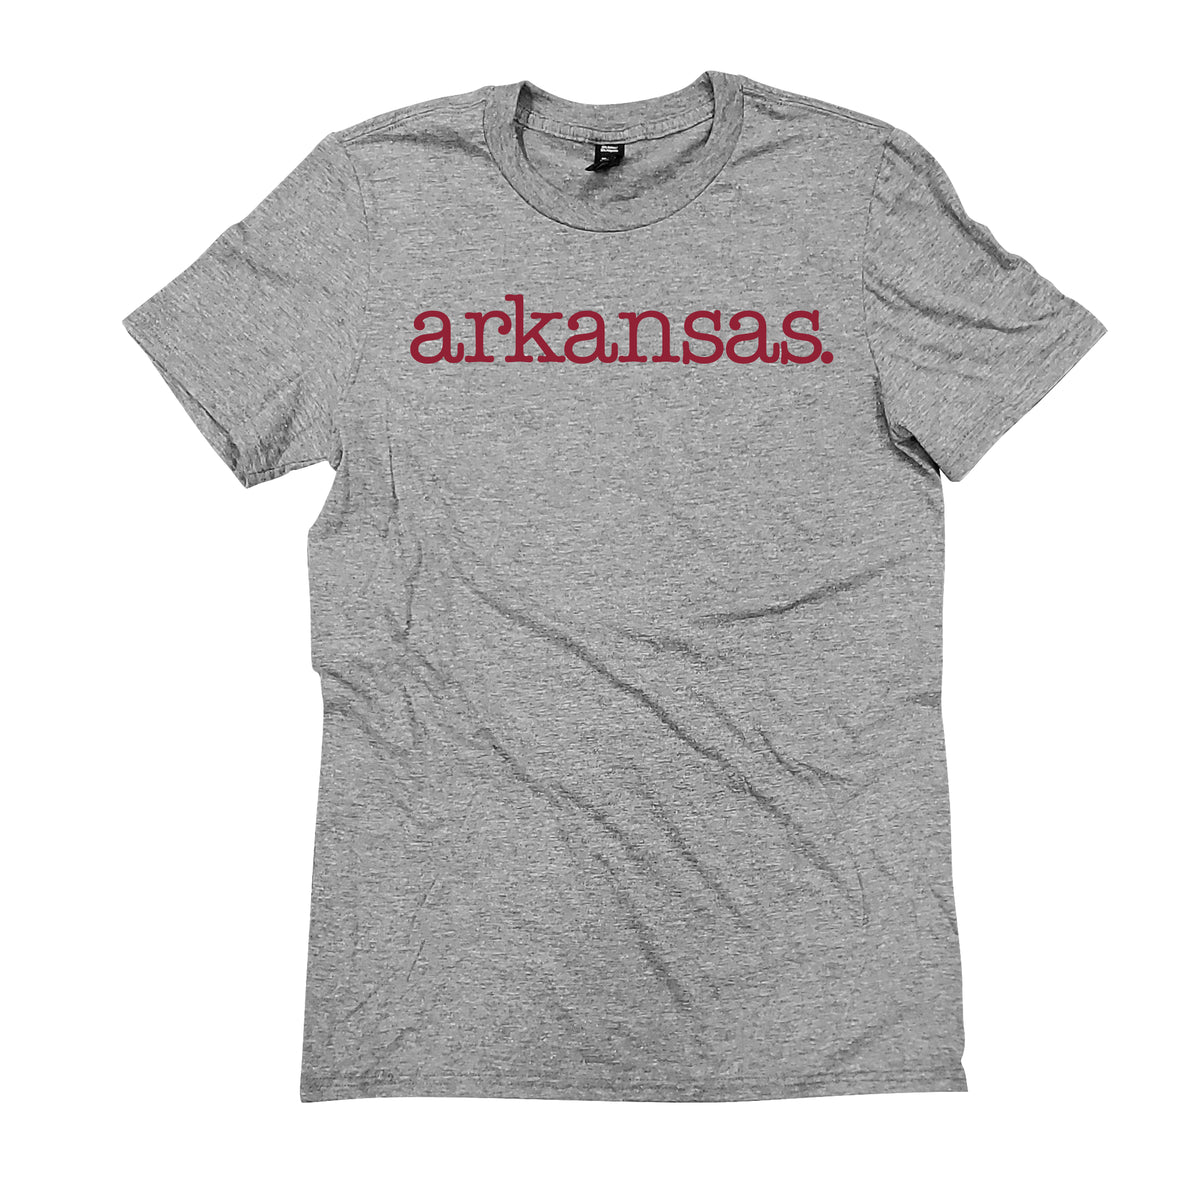 Arkansas. T-Shirt